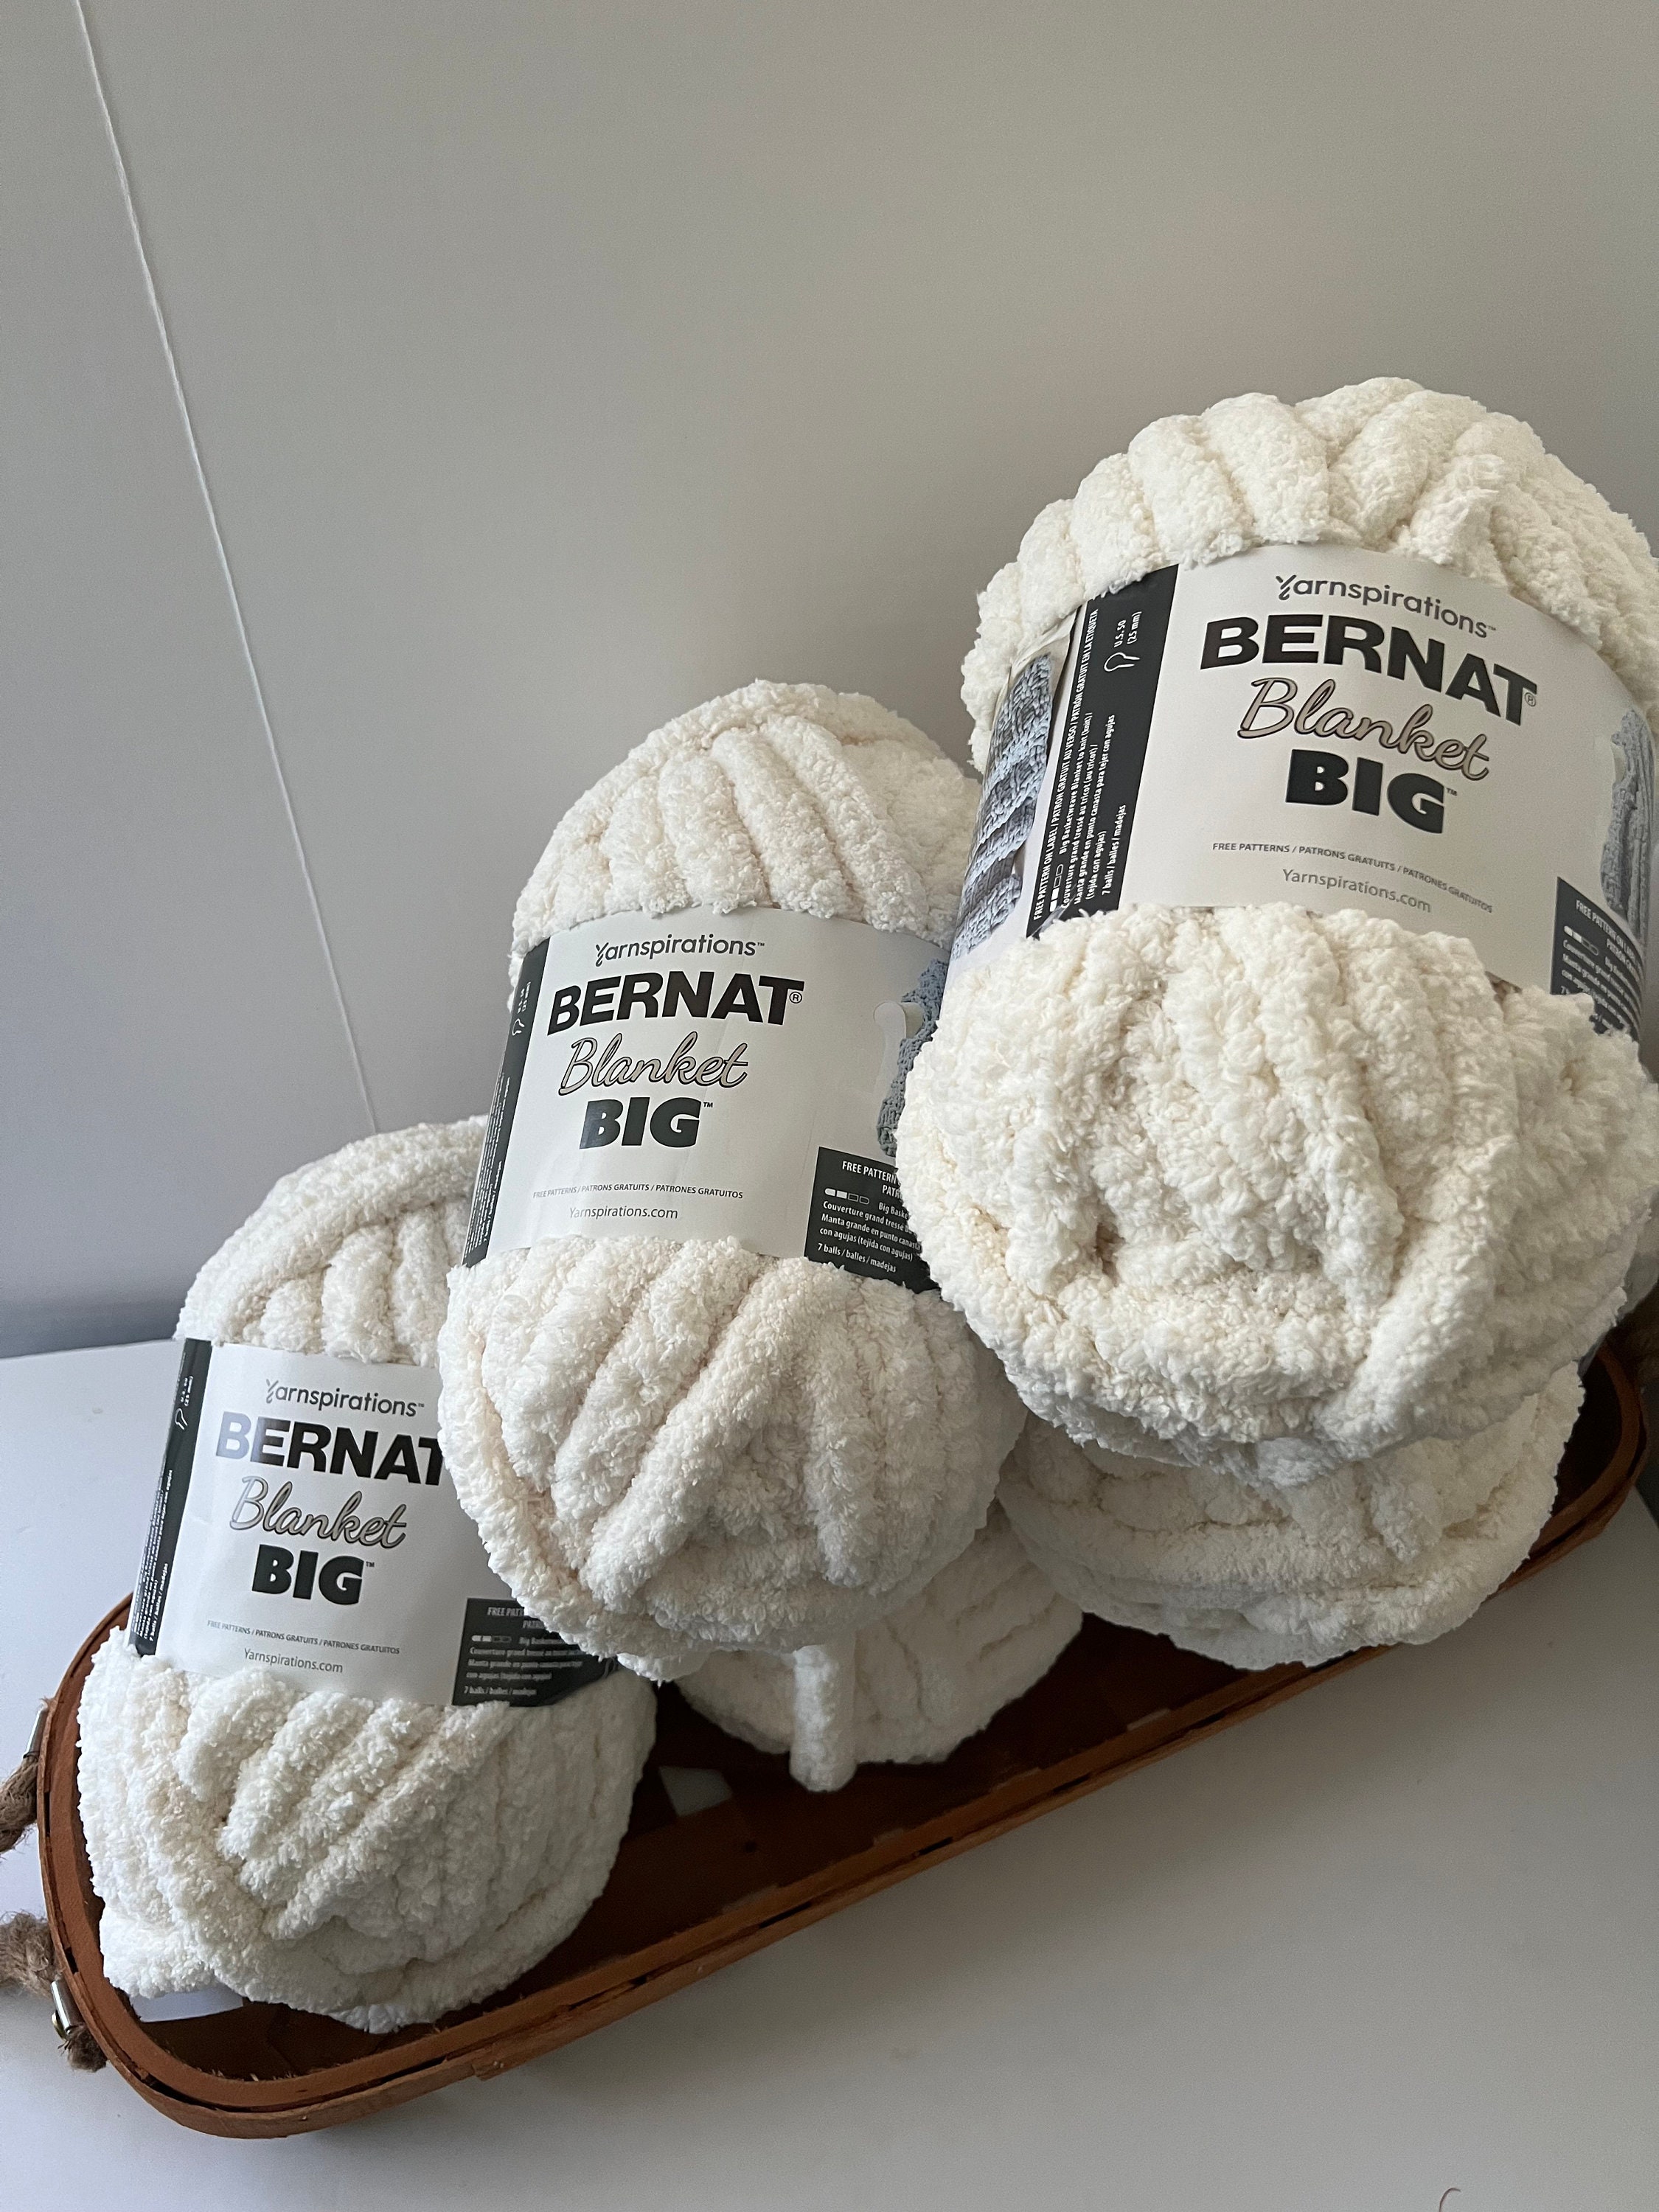 Bernat Blanket Big Ball Yarn (Taupe)